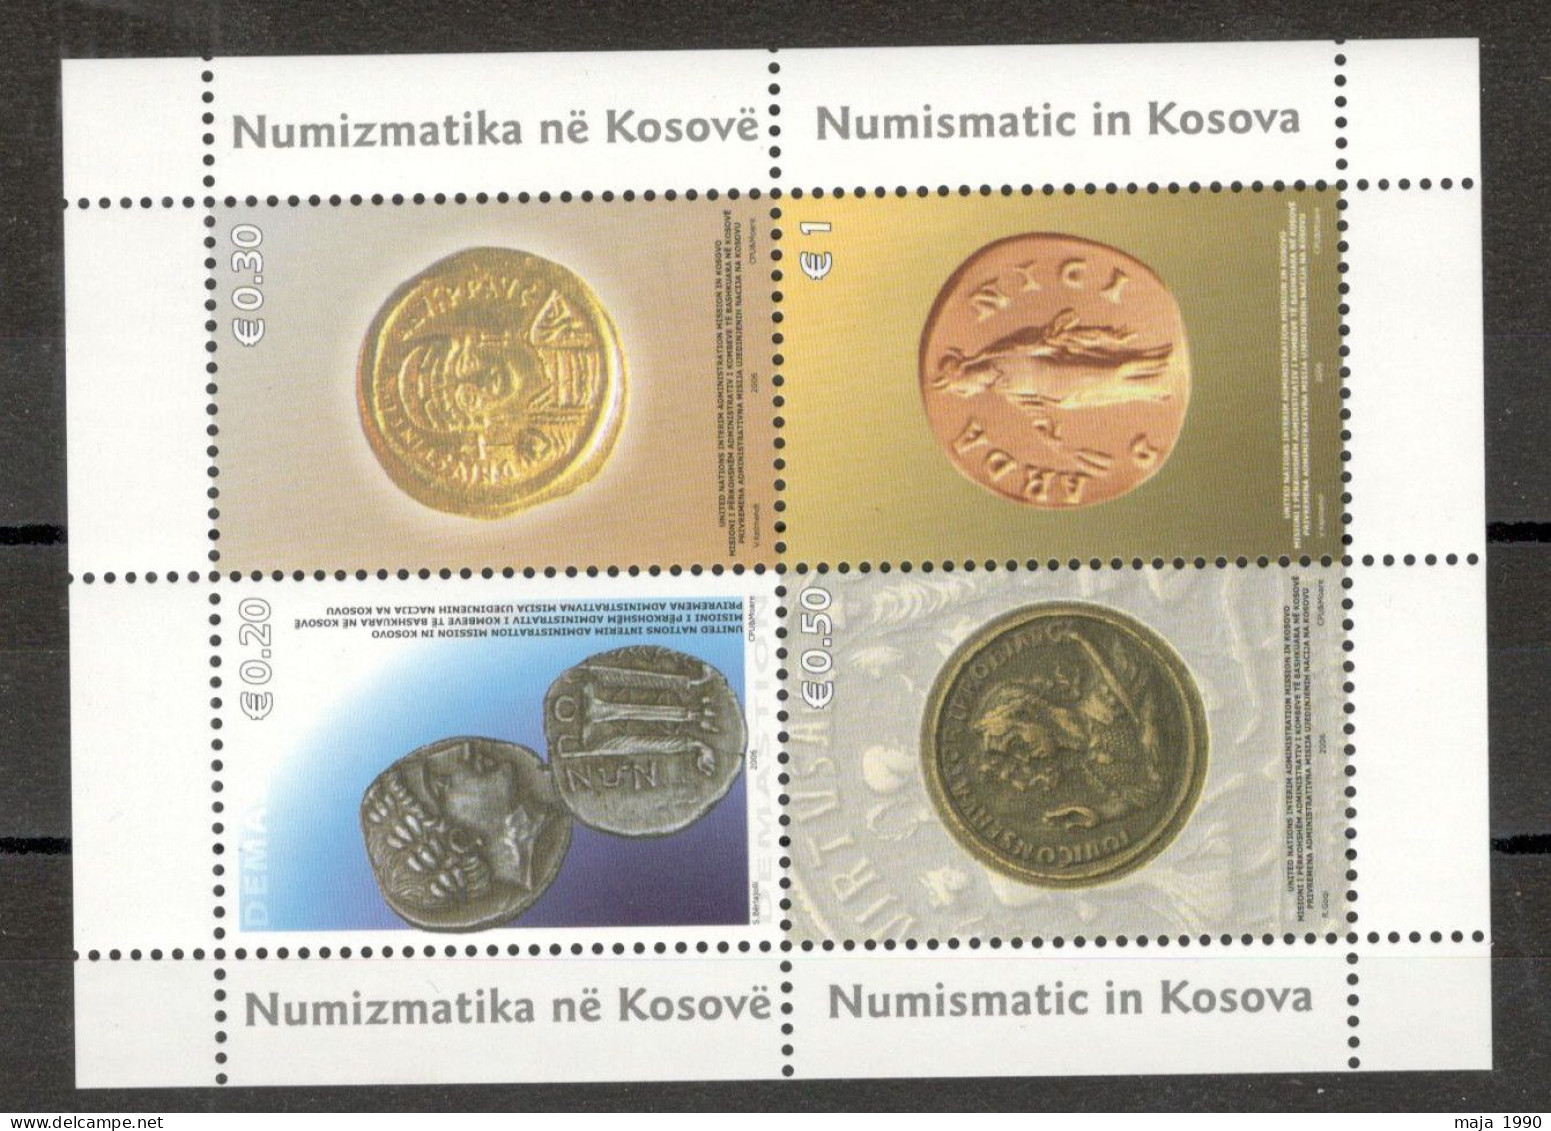 KOSOVO - MNH BLOCK - COIN ON STAMP - 2006. - Kosovo